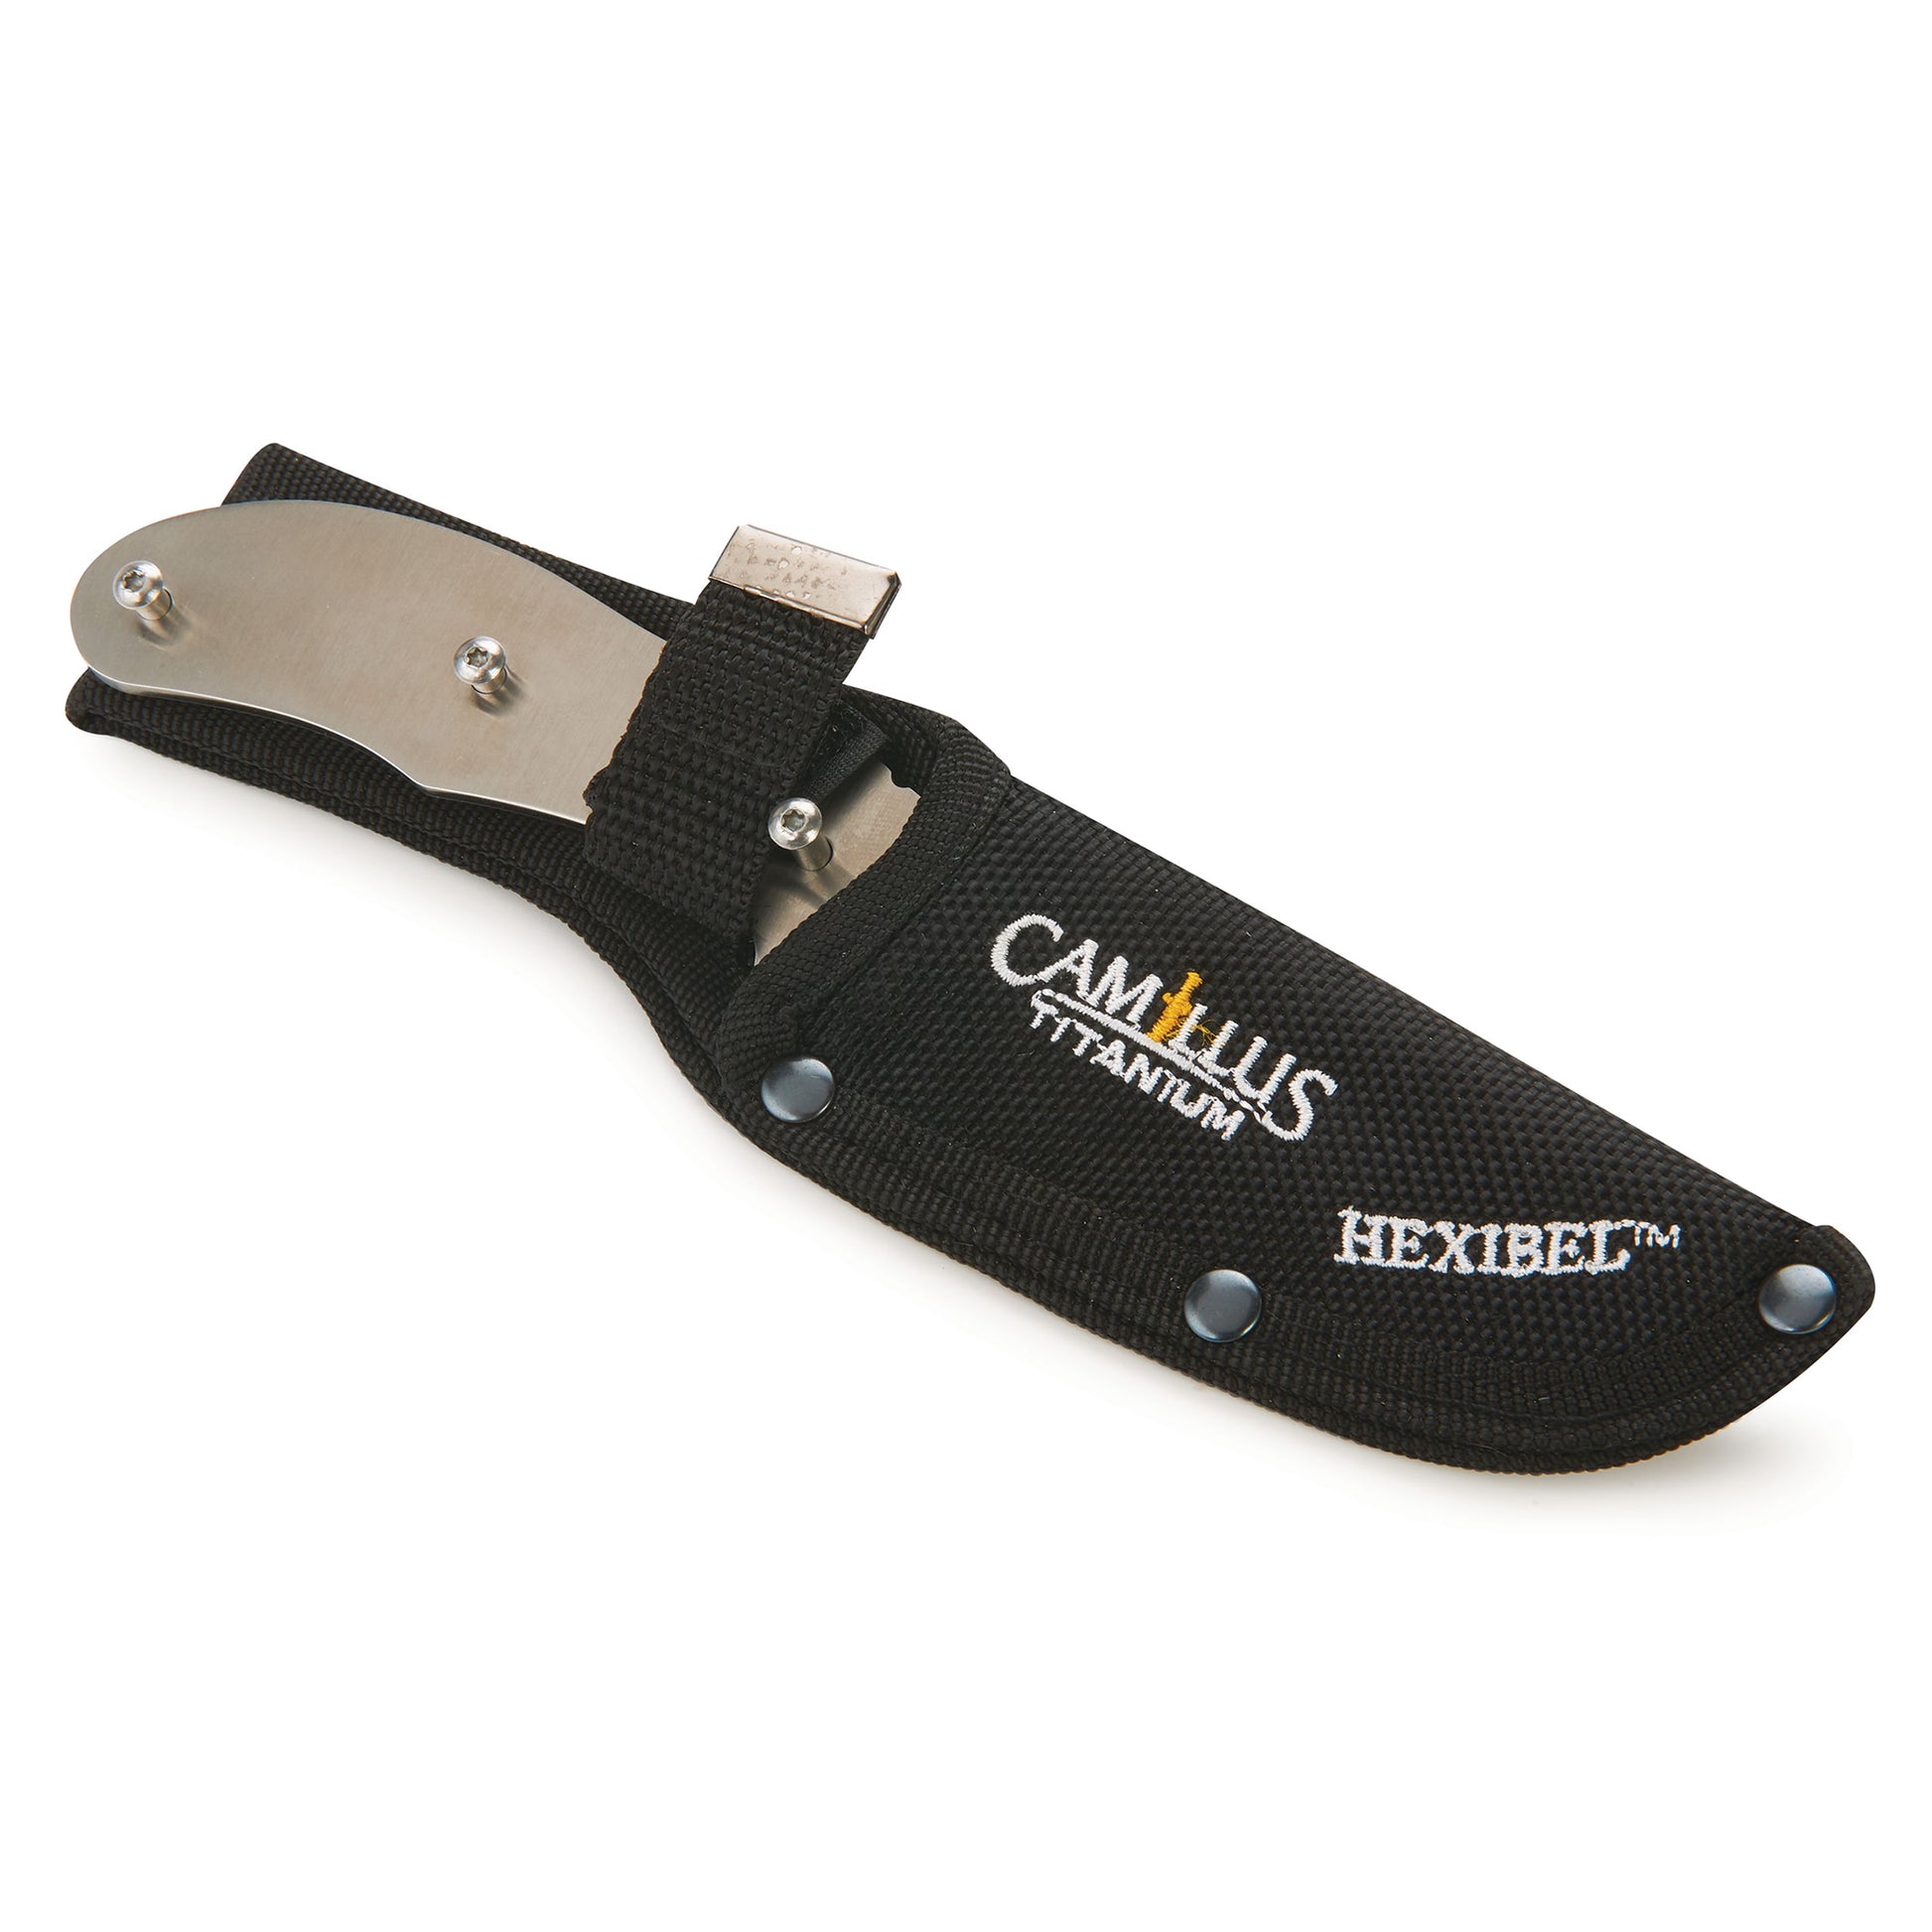 Camilus HOPPER Fixed Blade Knife Kit alt 2